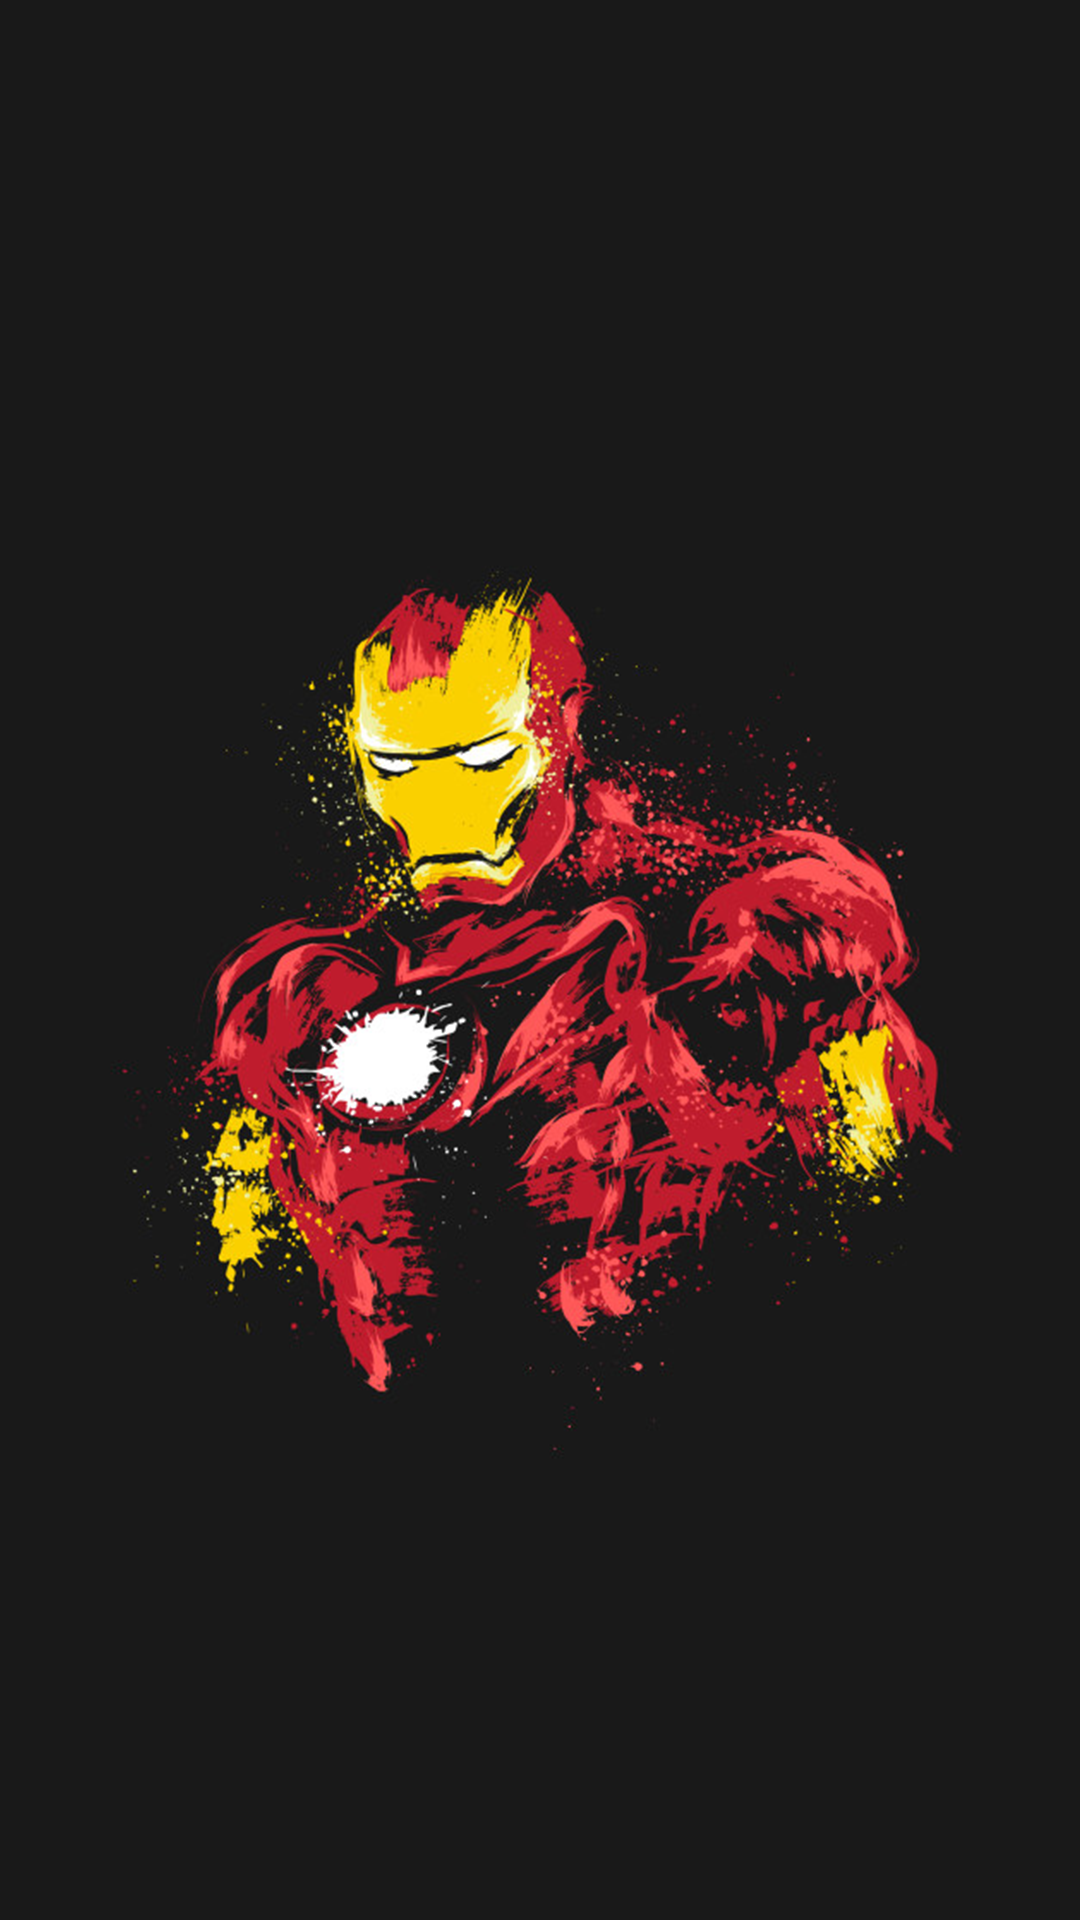 Iron Man AMOLED Wallpaper